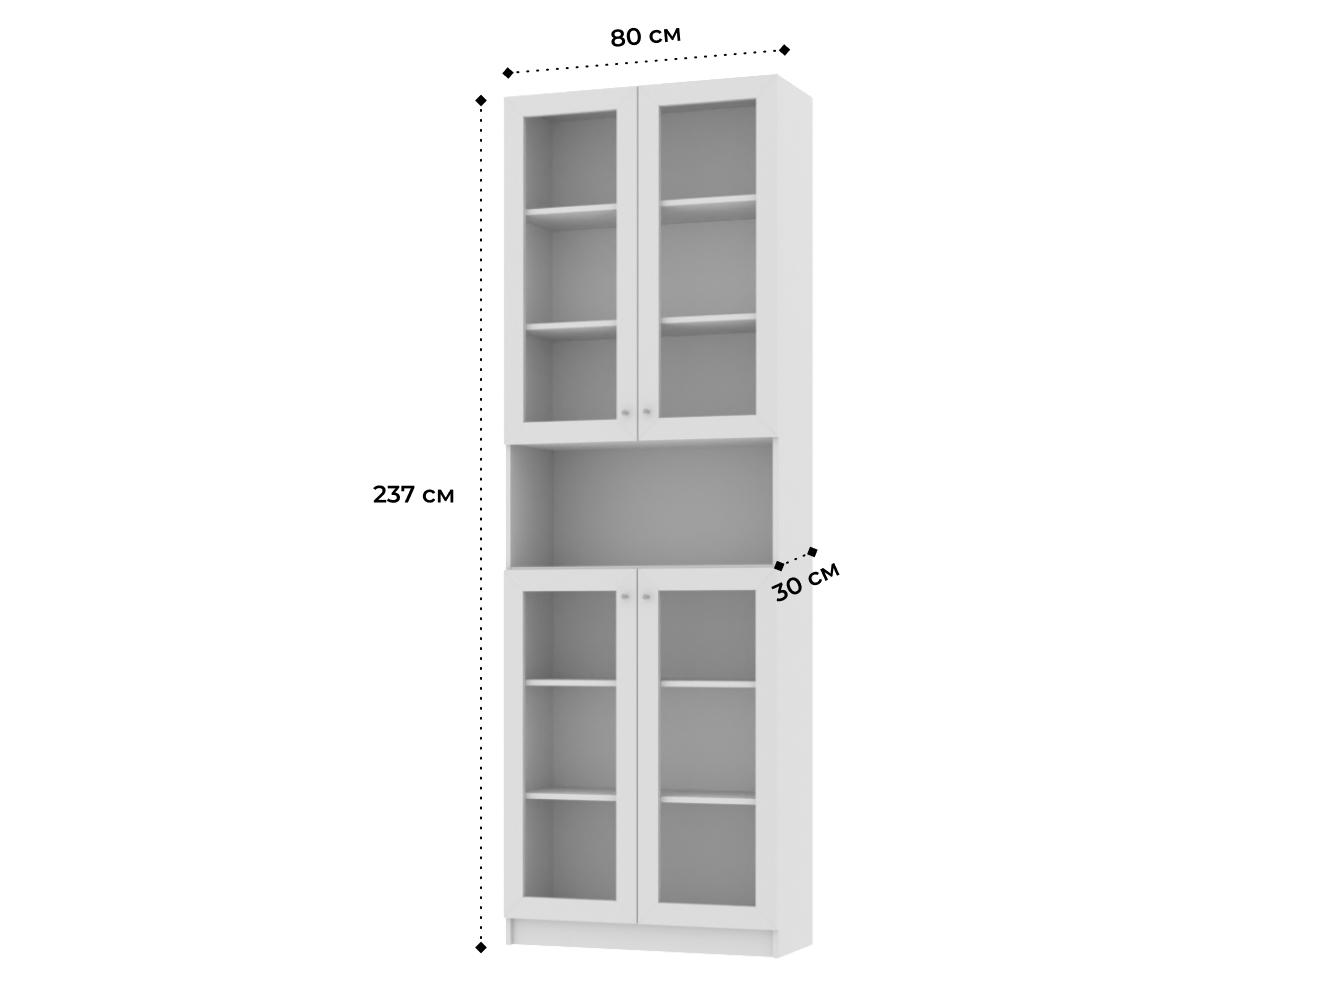  Книжный шкаф Билли 386 white ИКЕА (IKEA) изображение товара